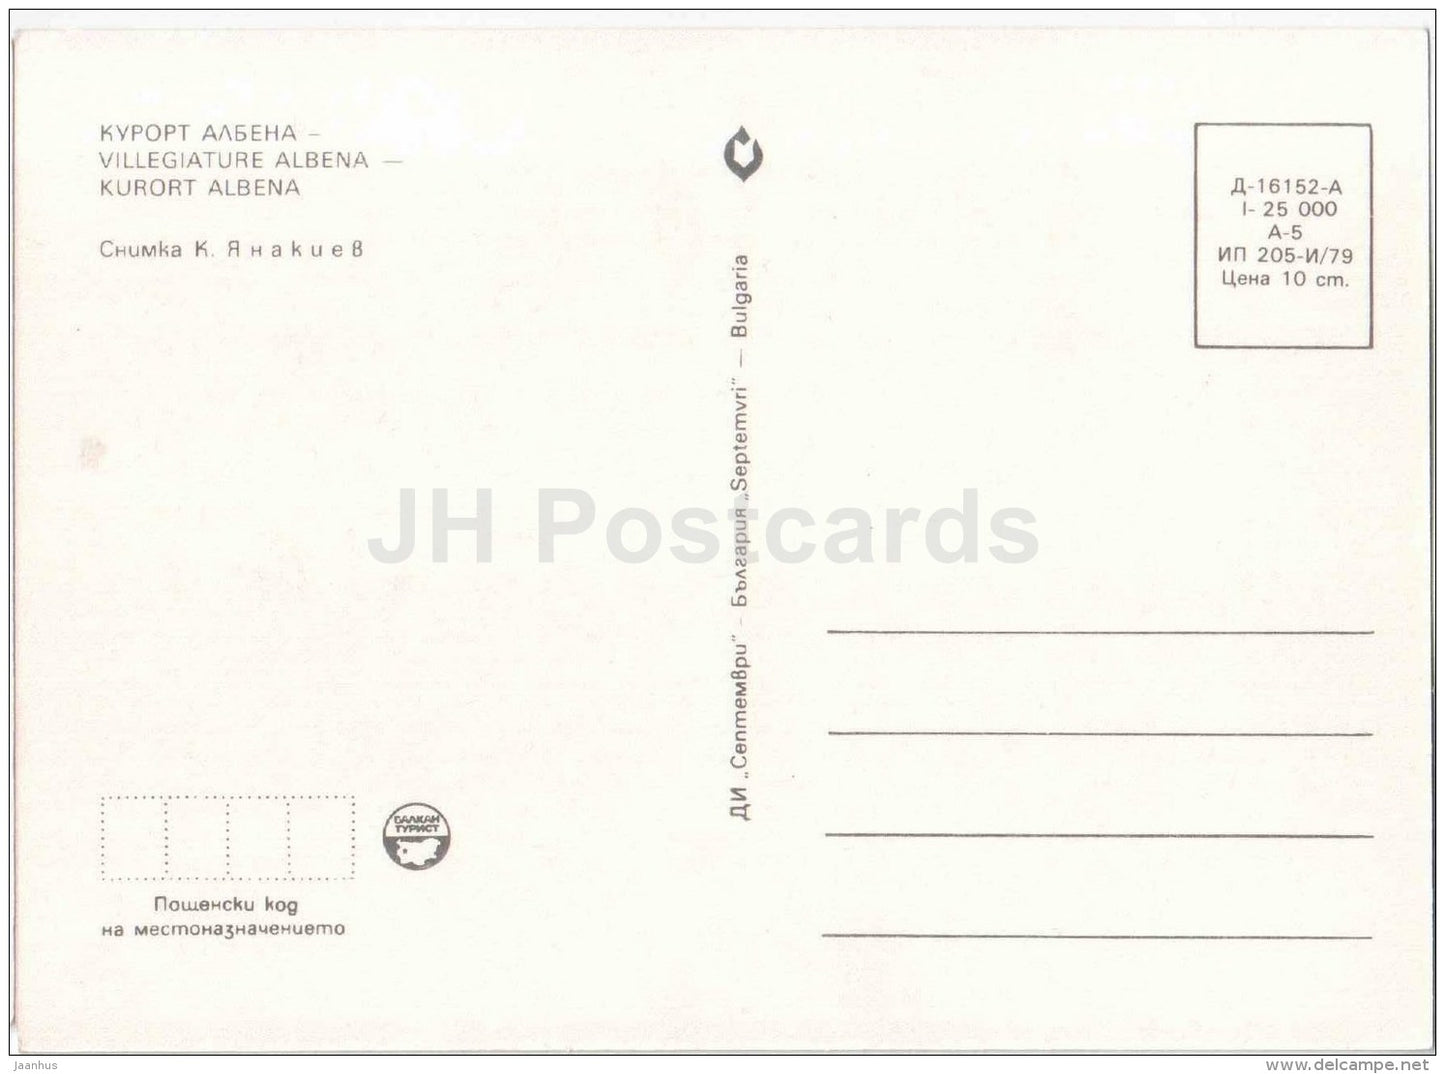 hotels - Albena - 1979 - Bulgaria - unused - JH Postcards